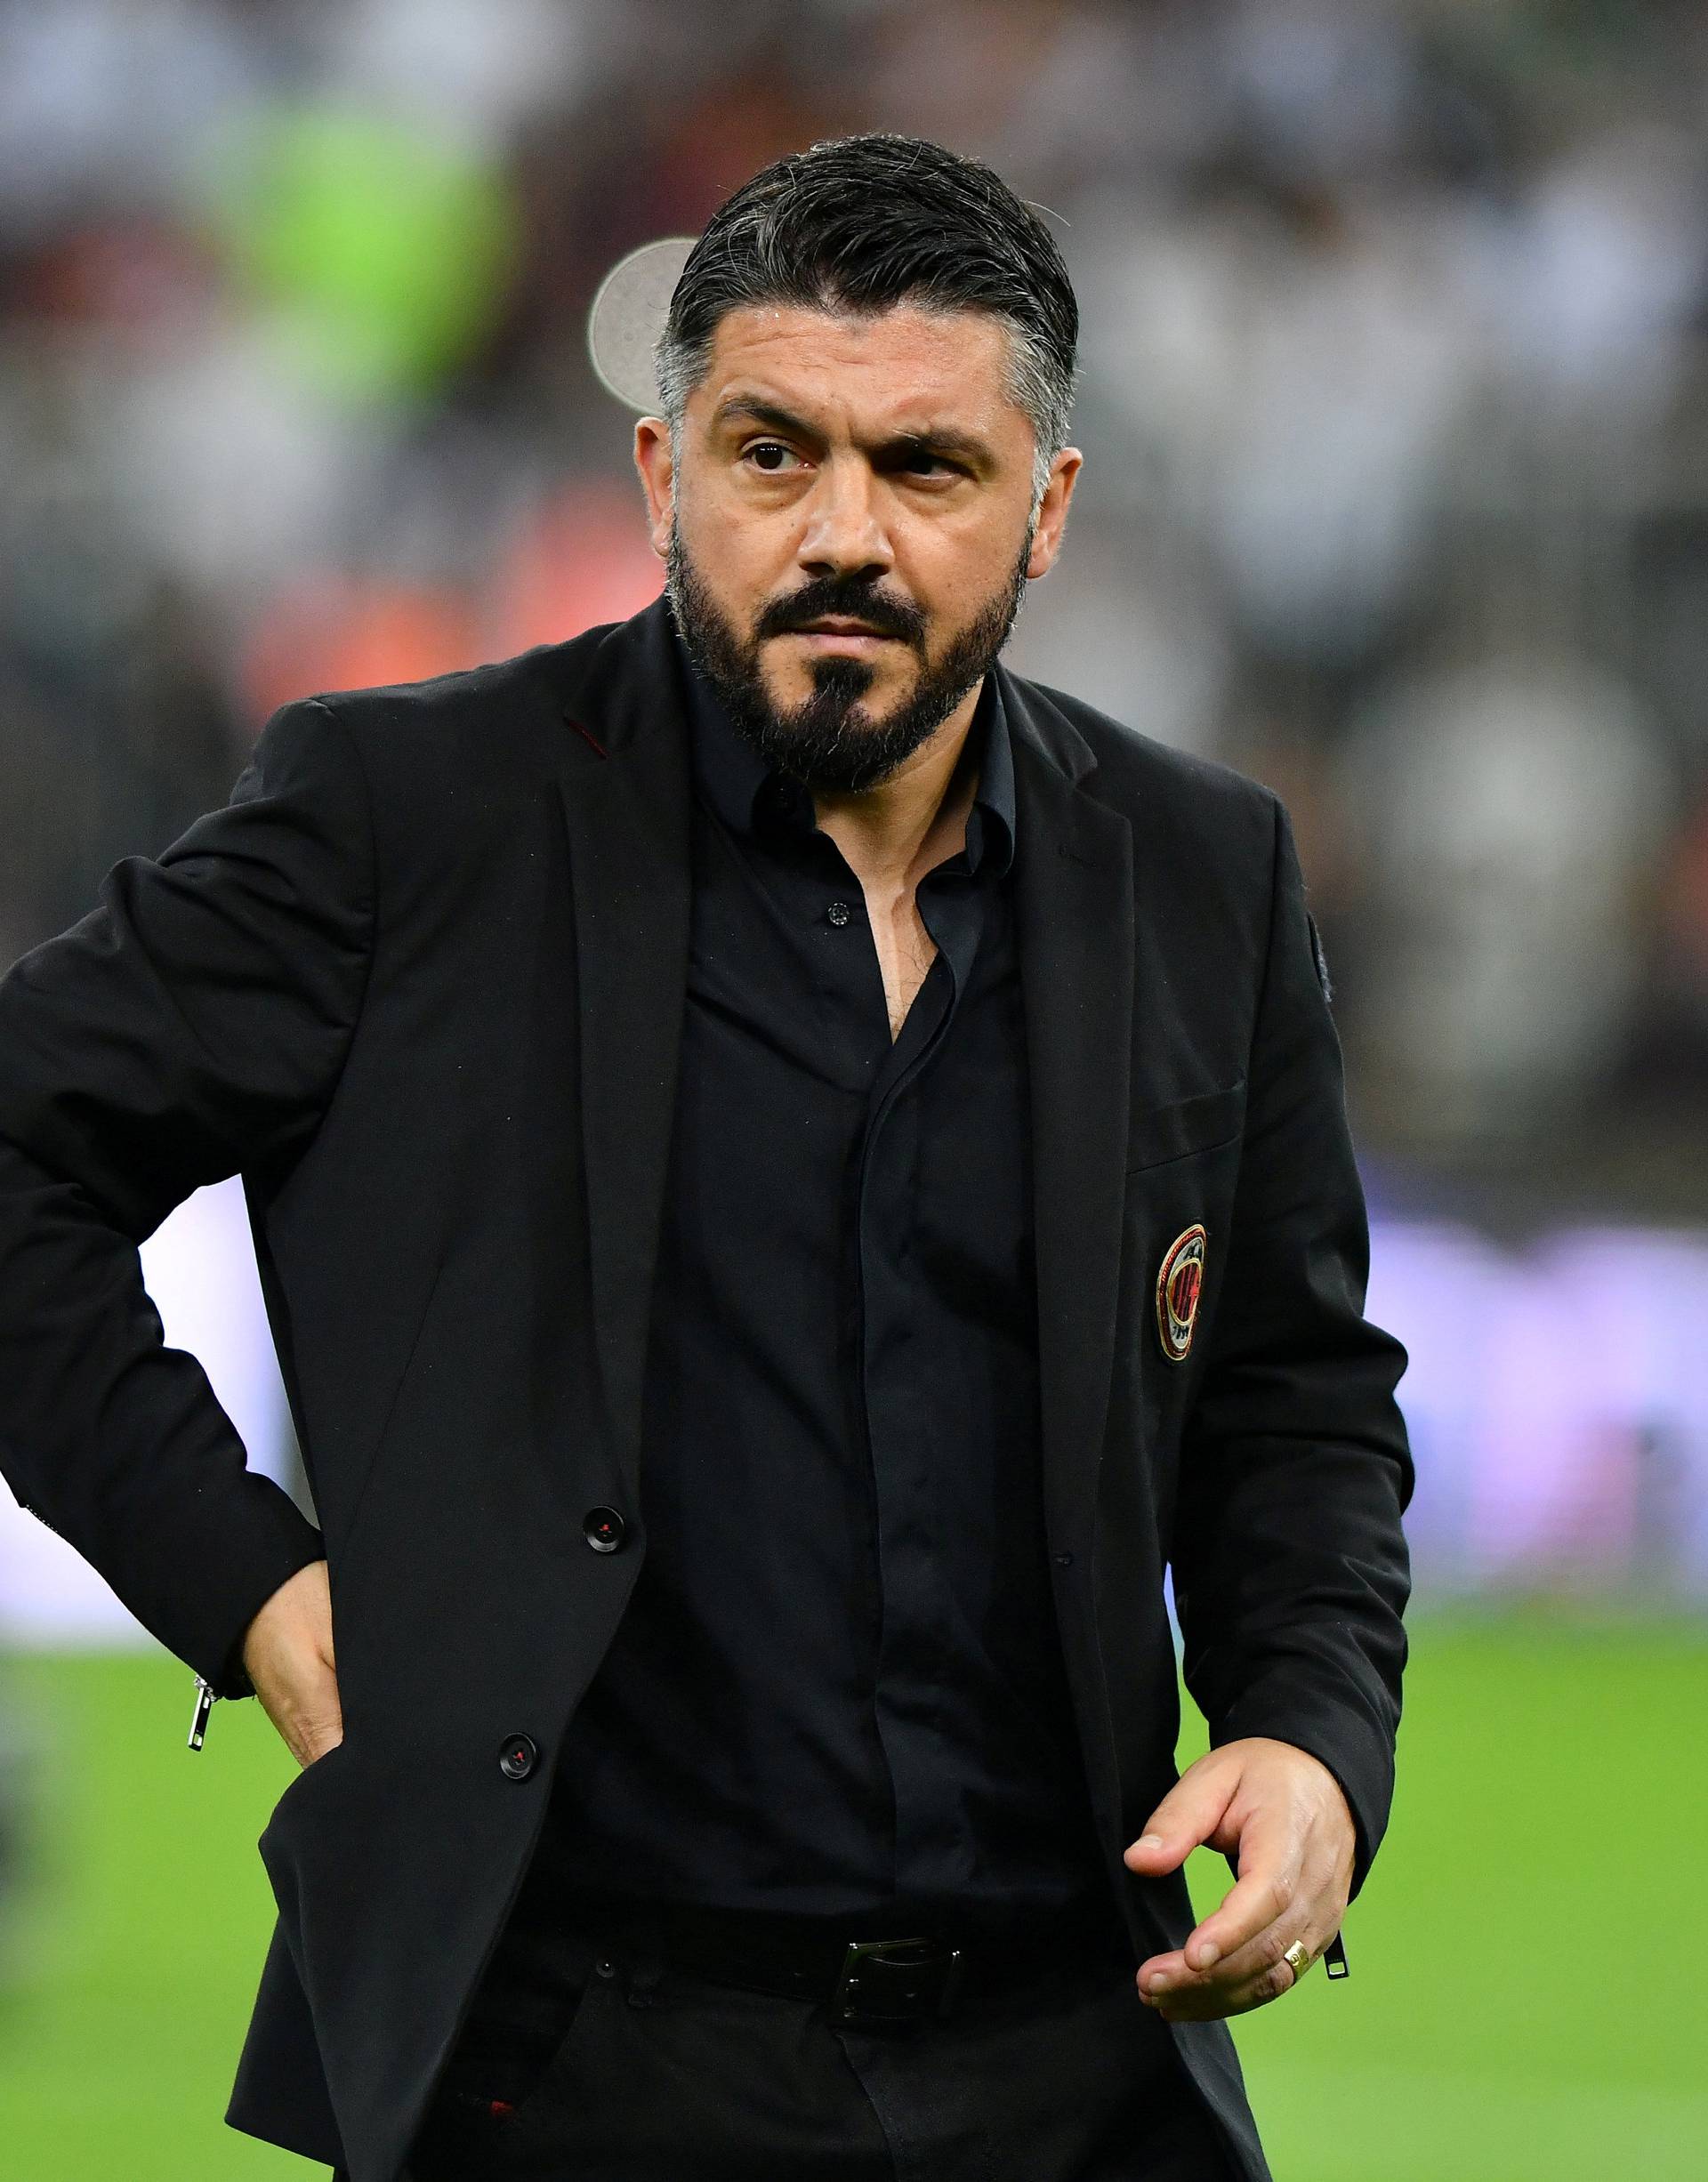 FILE PHOTO: AC Milan coach Gennaro Gattuso at King Abdullah Sports City, Jeddah, Saudi Arabia - January 16, 2019